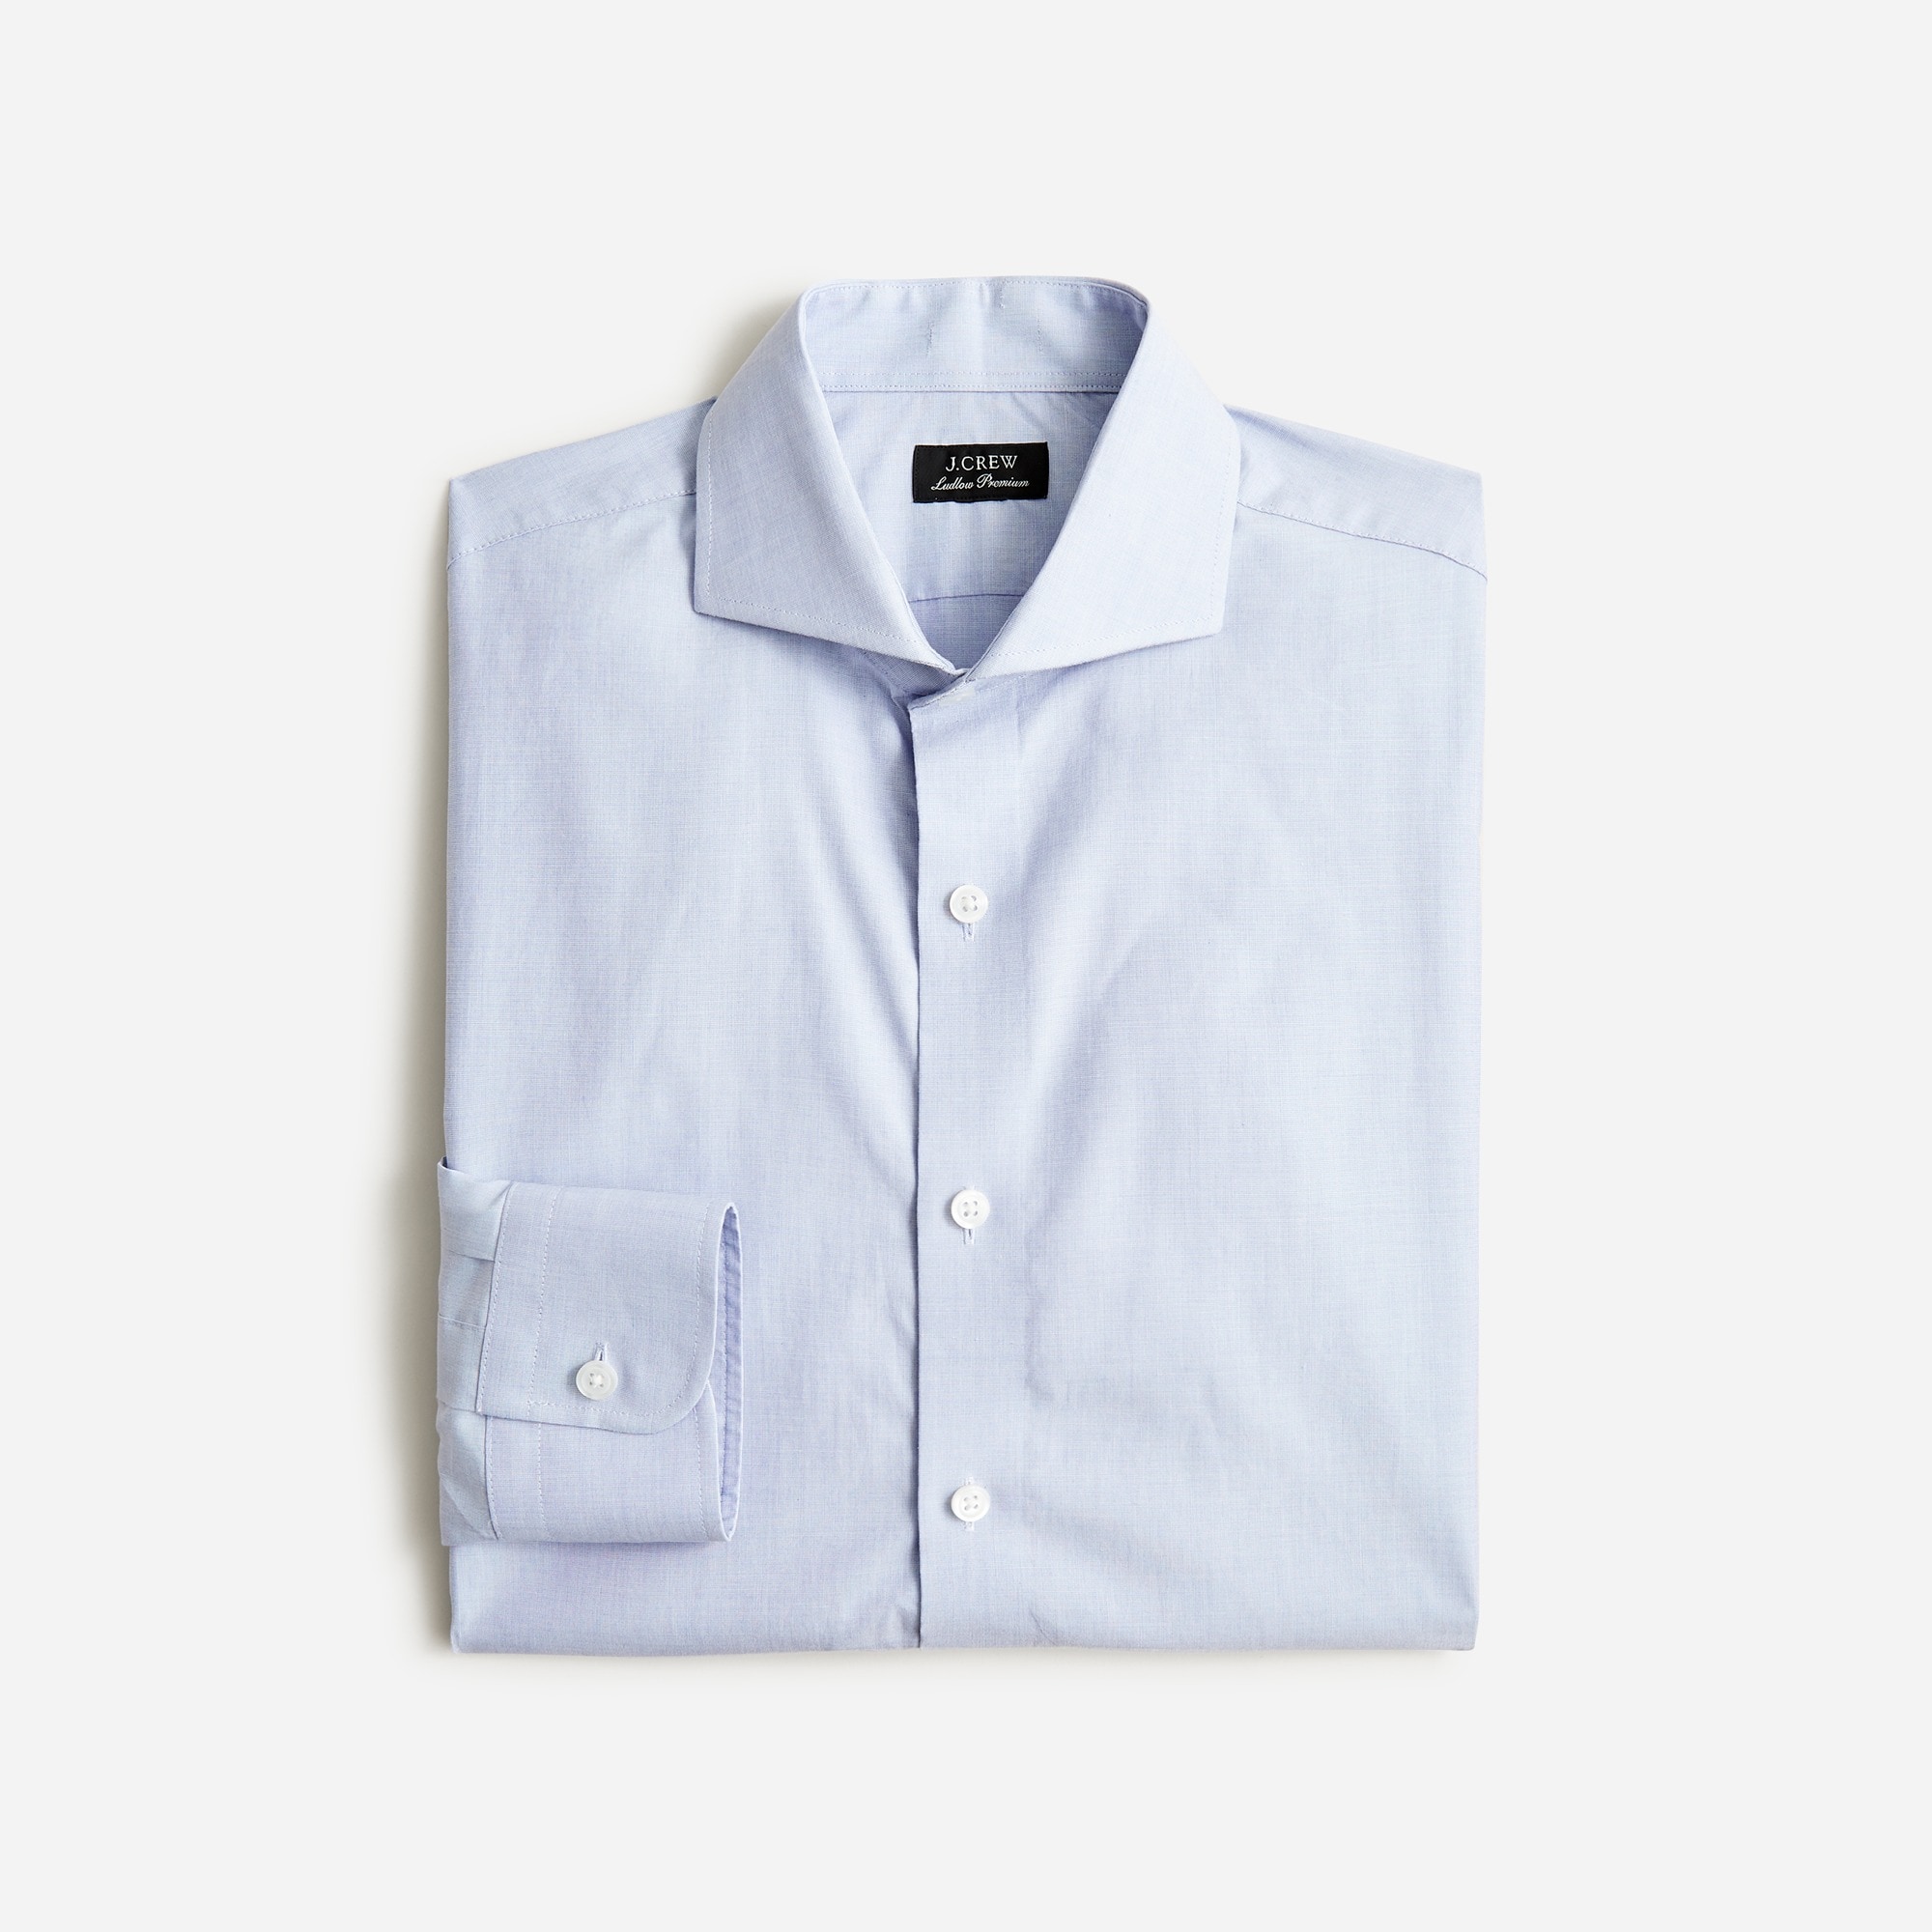 Jcrew Ludlow Premium fine cotton dress shirt with cutaway collar